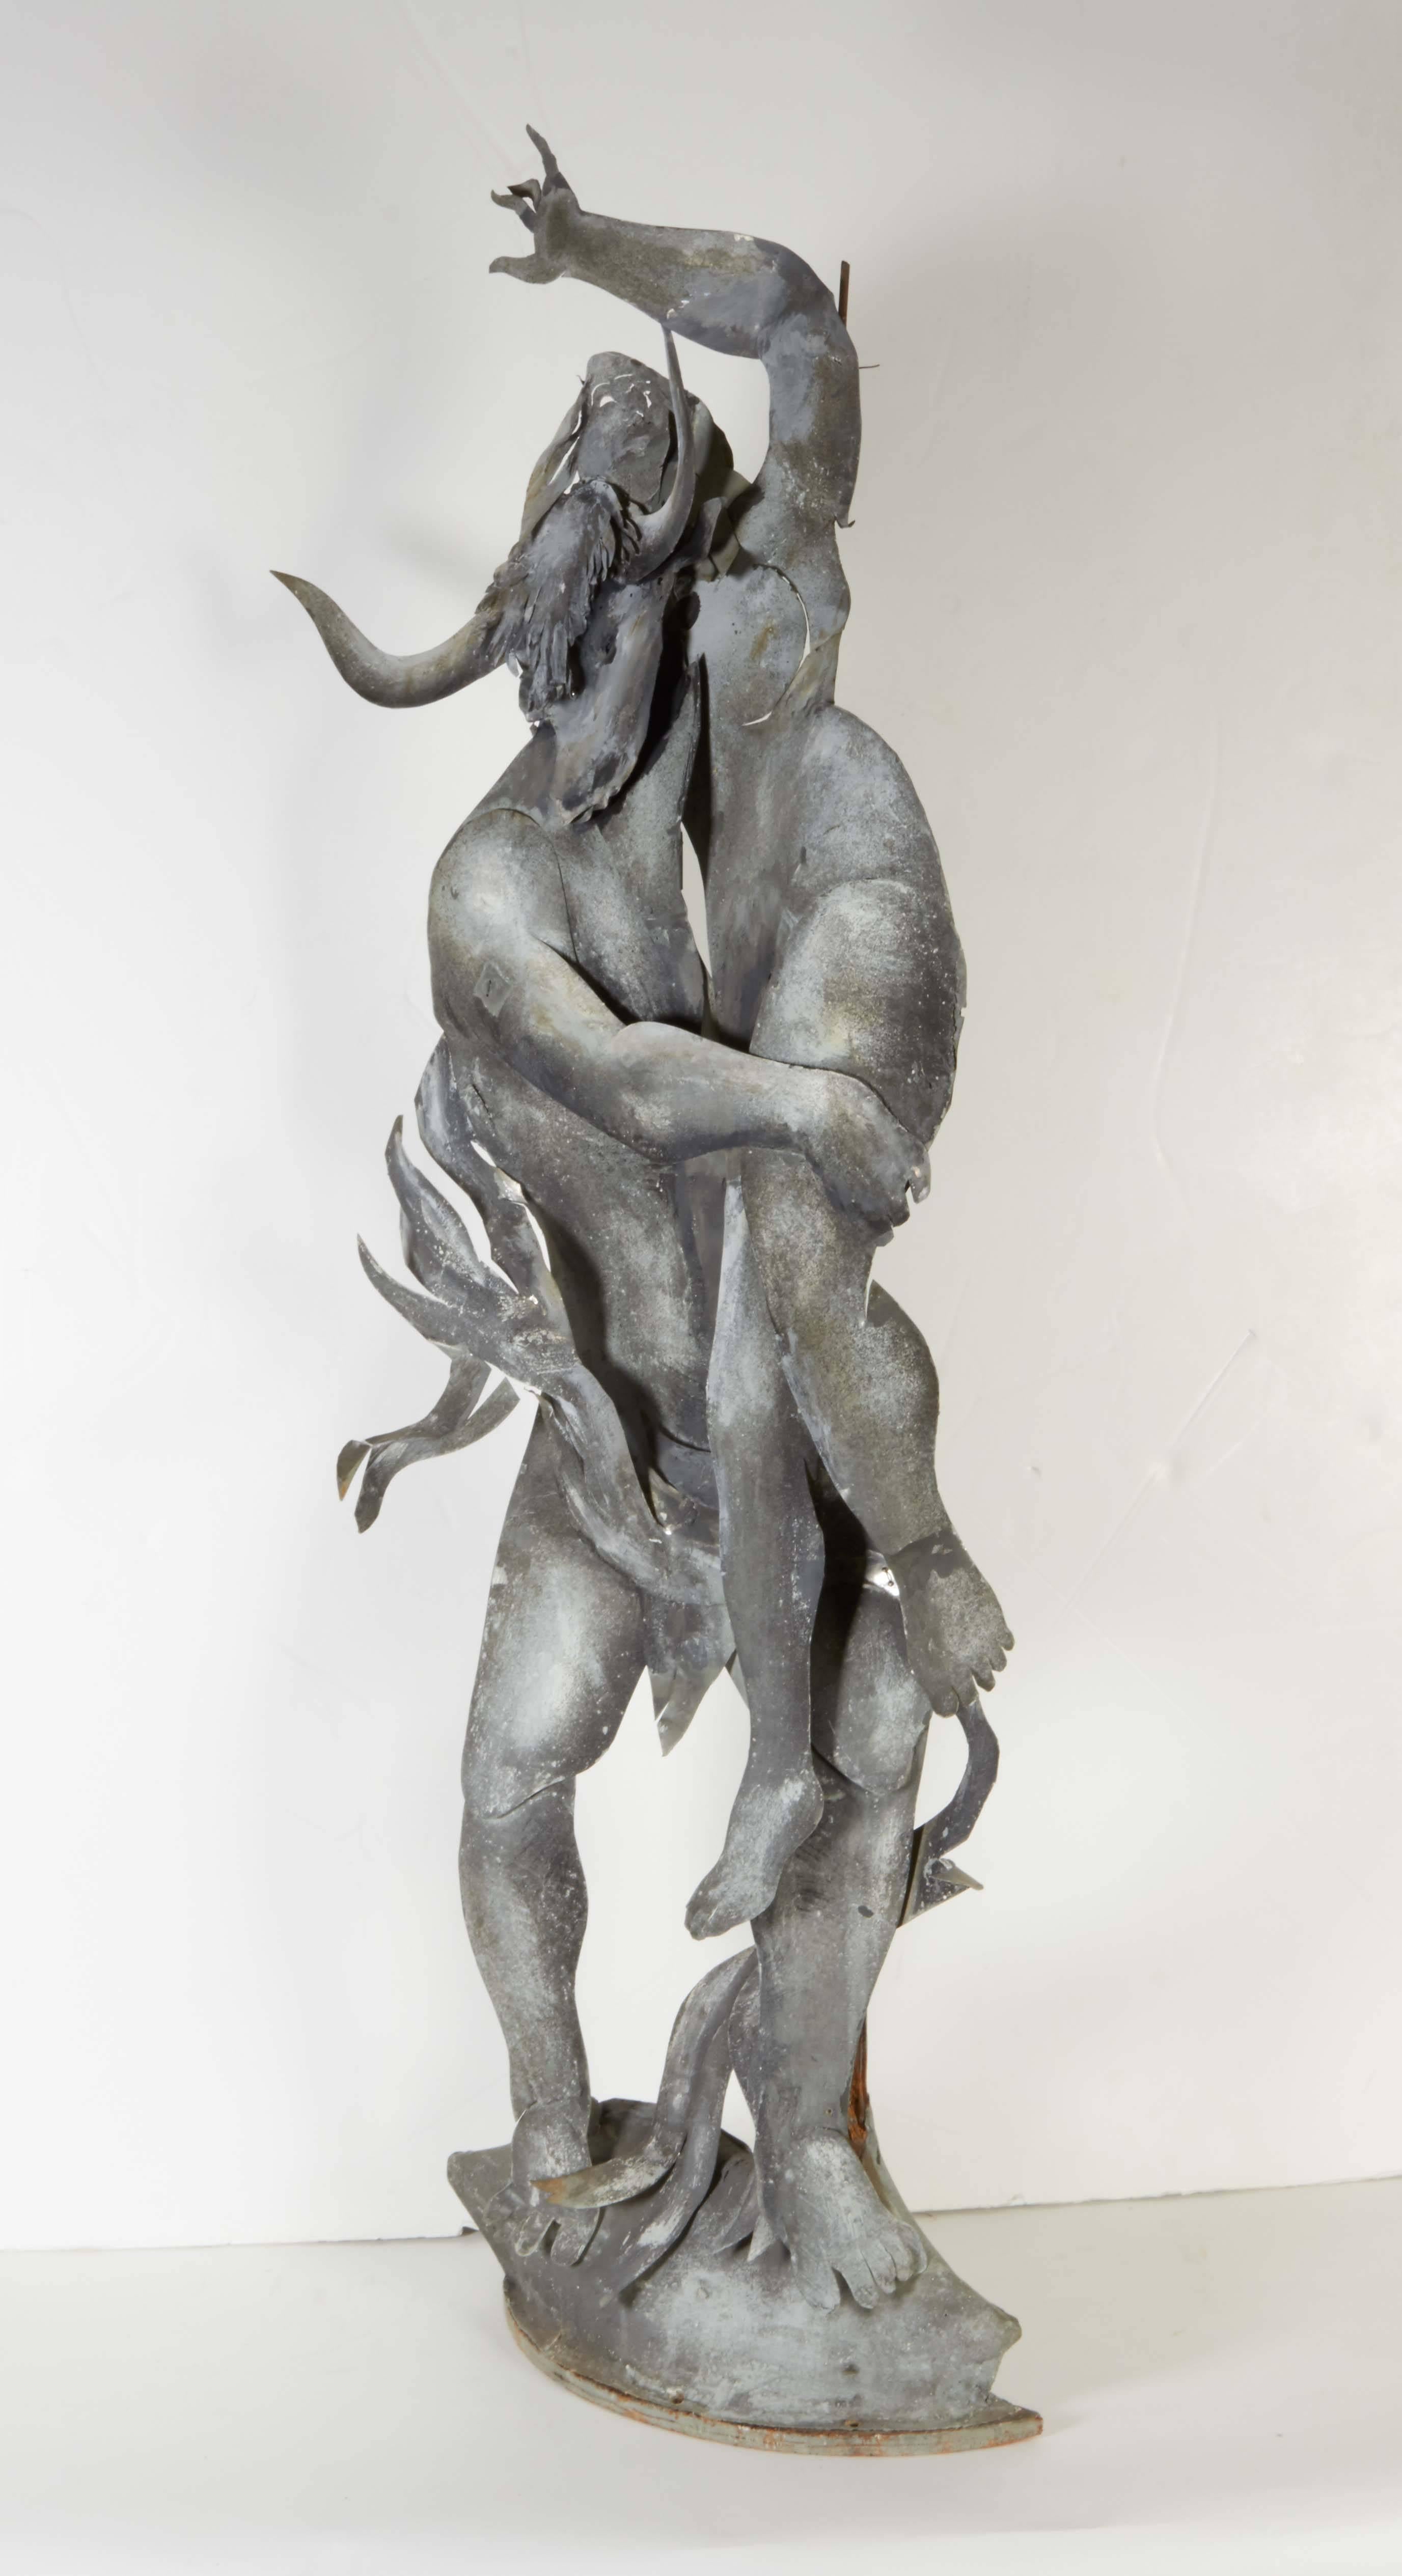 Wood Modernist Sculpture of the Minotaur Abducting a Maiden